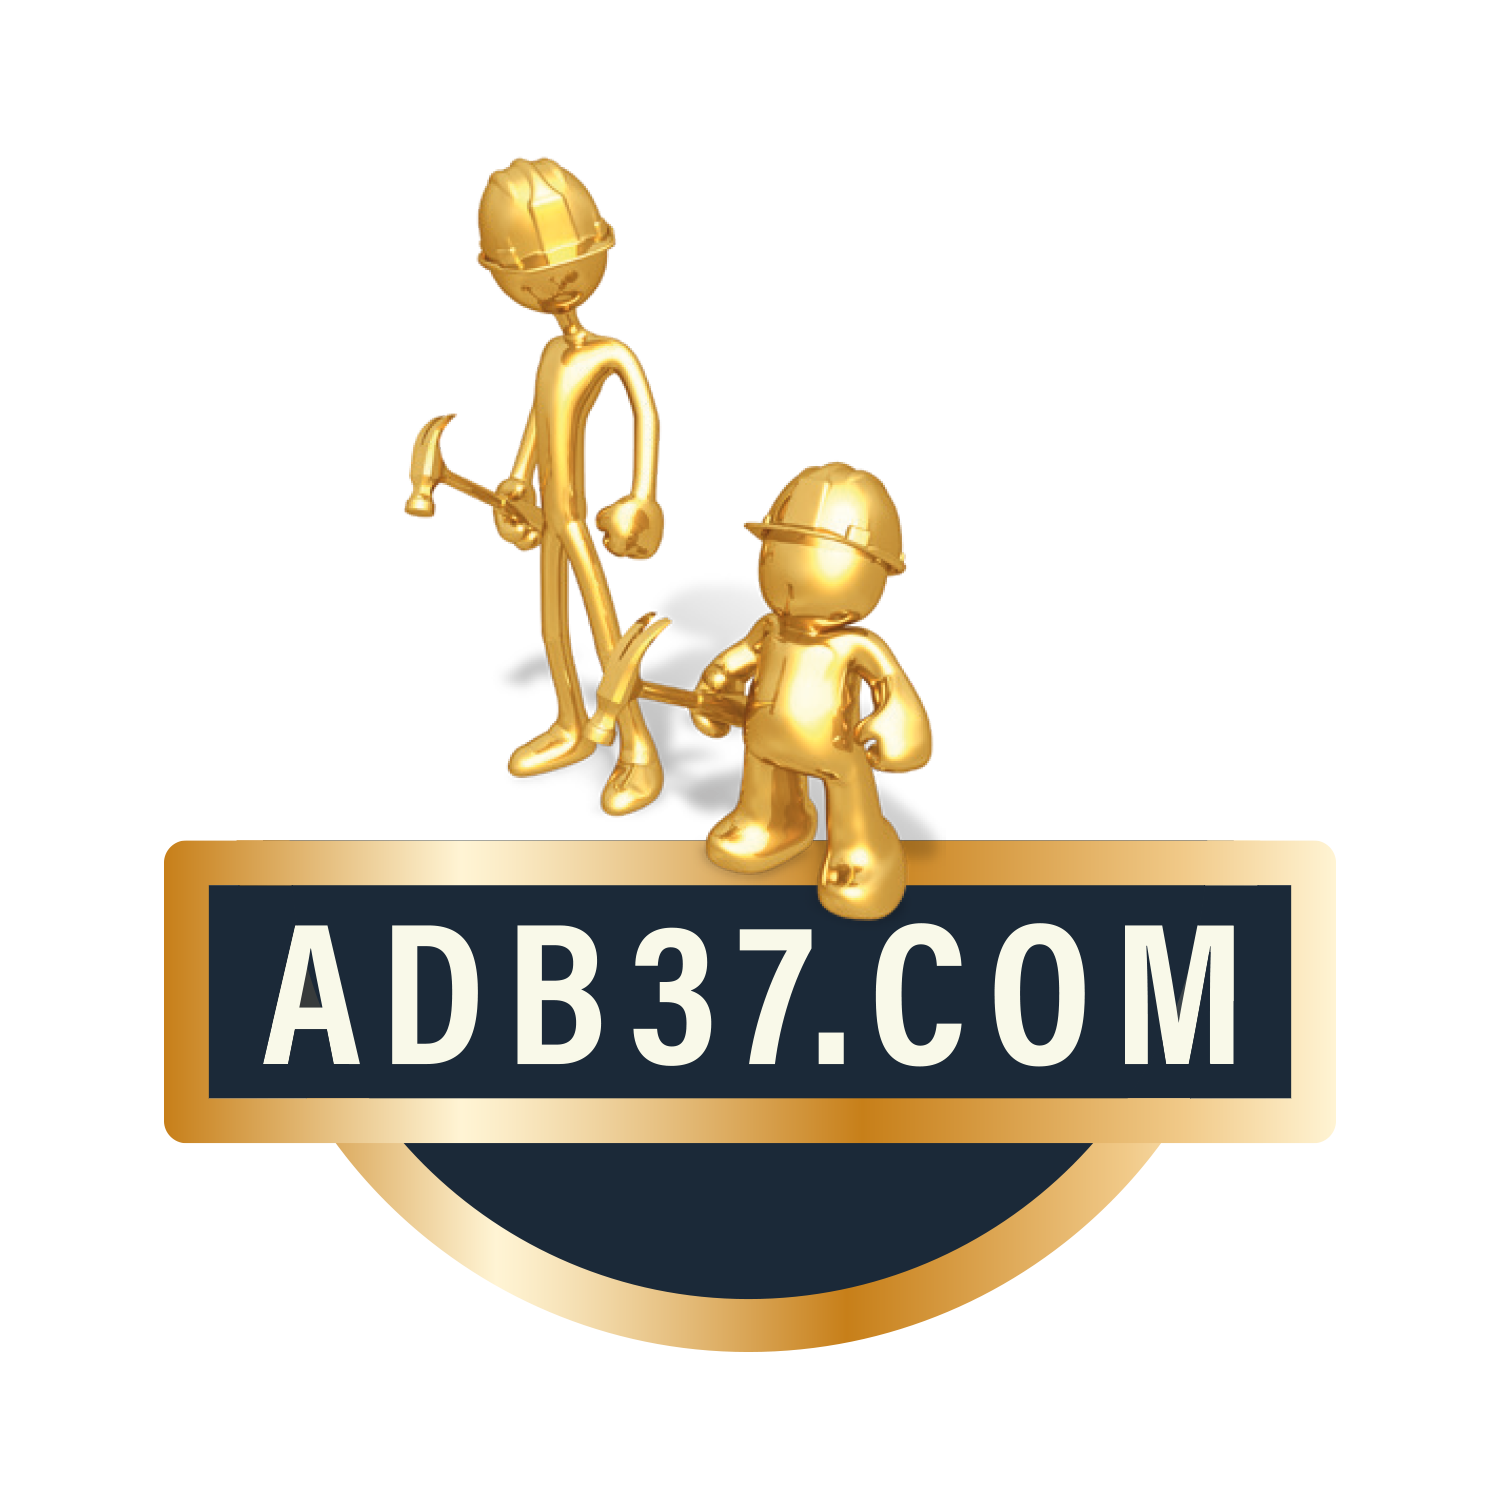 La charte qualité ADB37